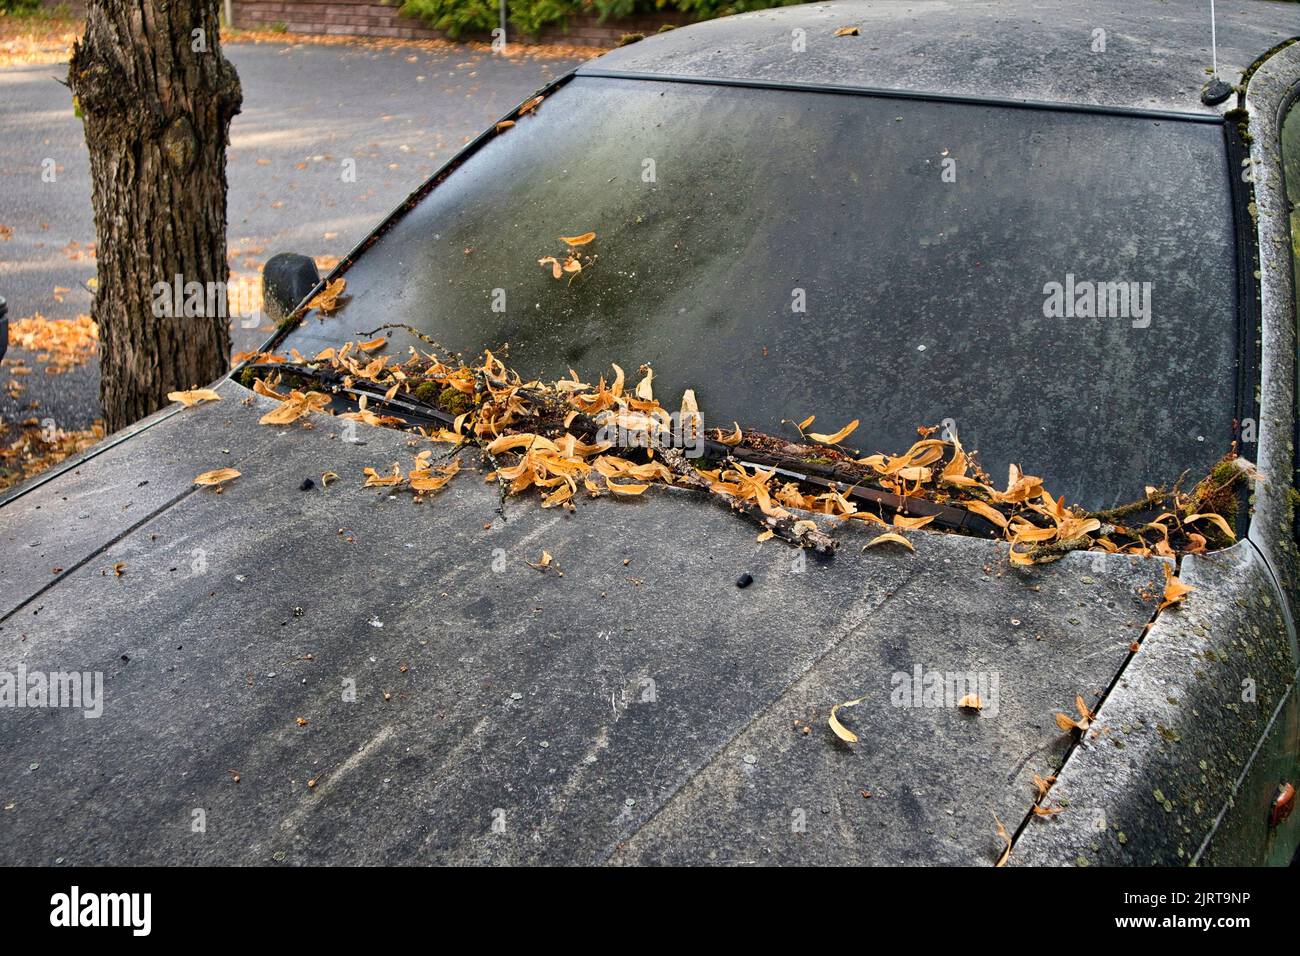 Abandoned car under a tree Stock Photo